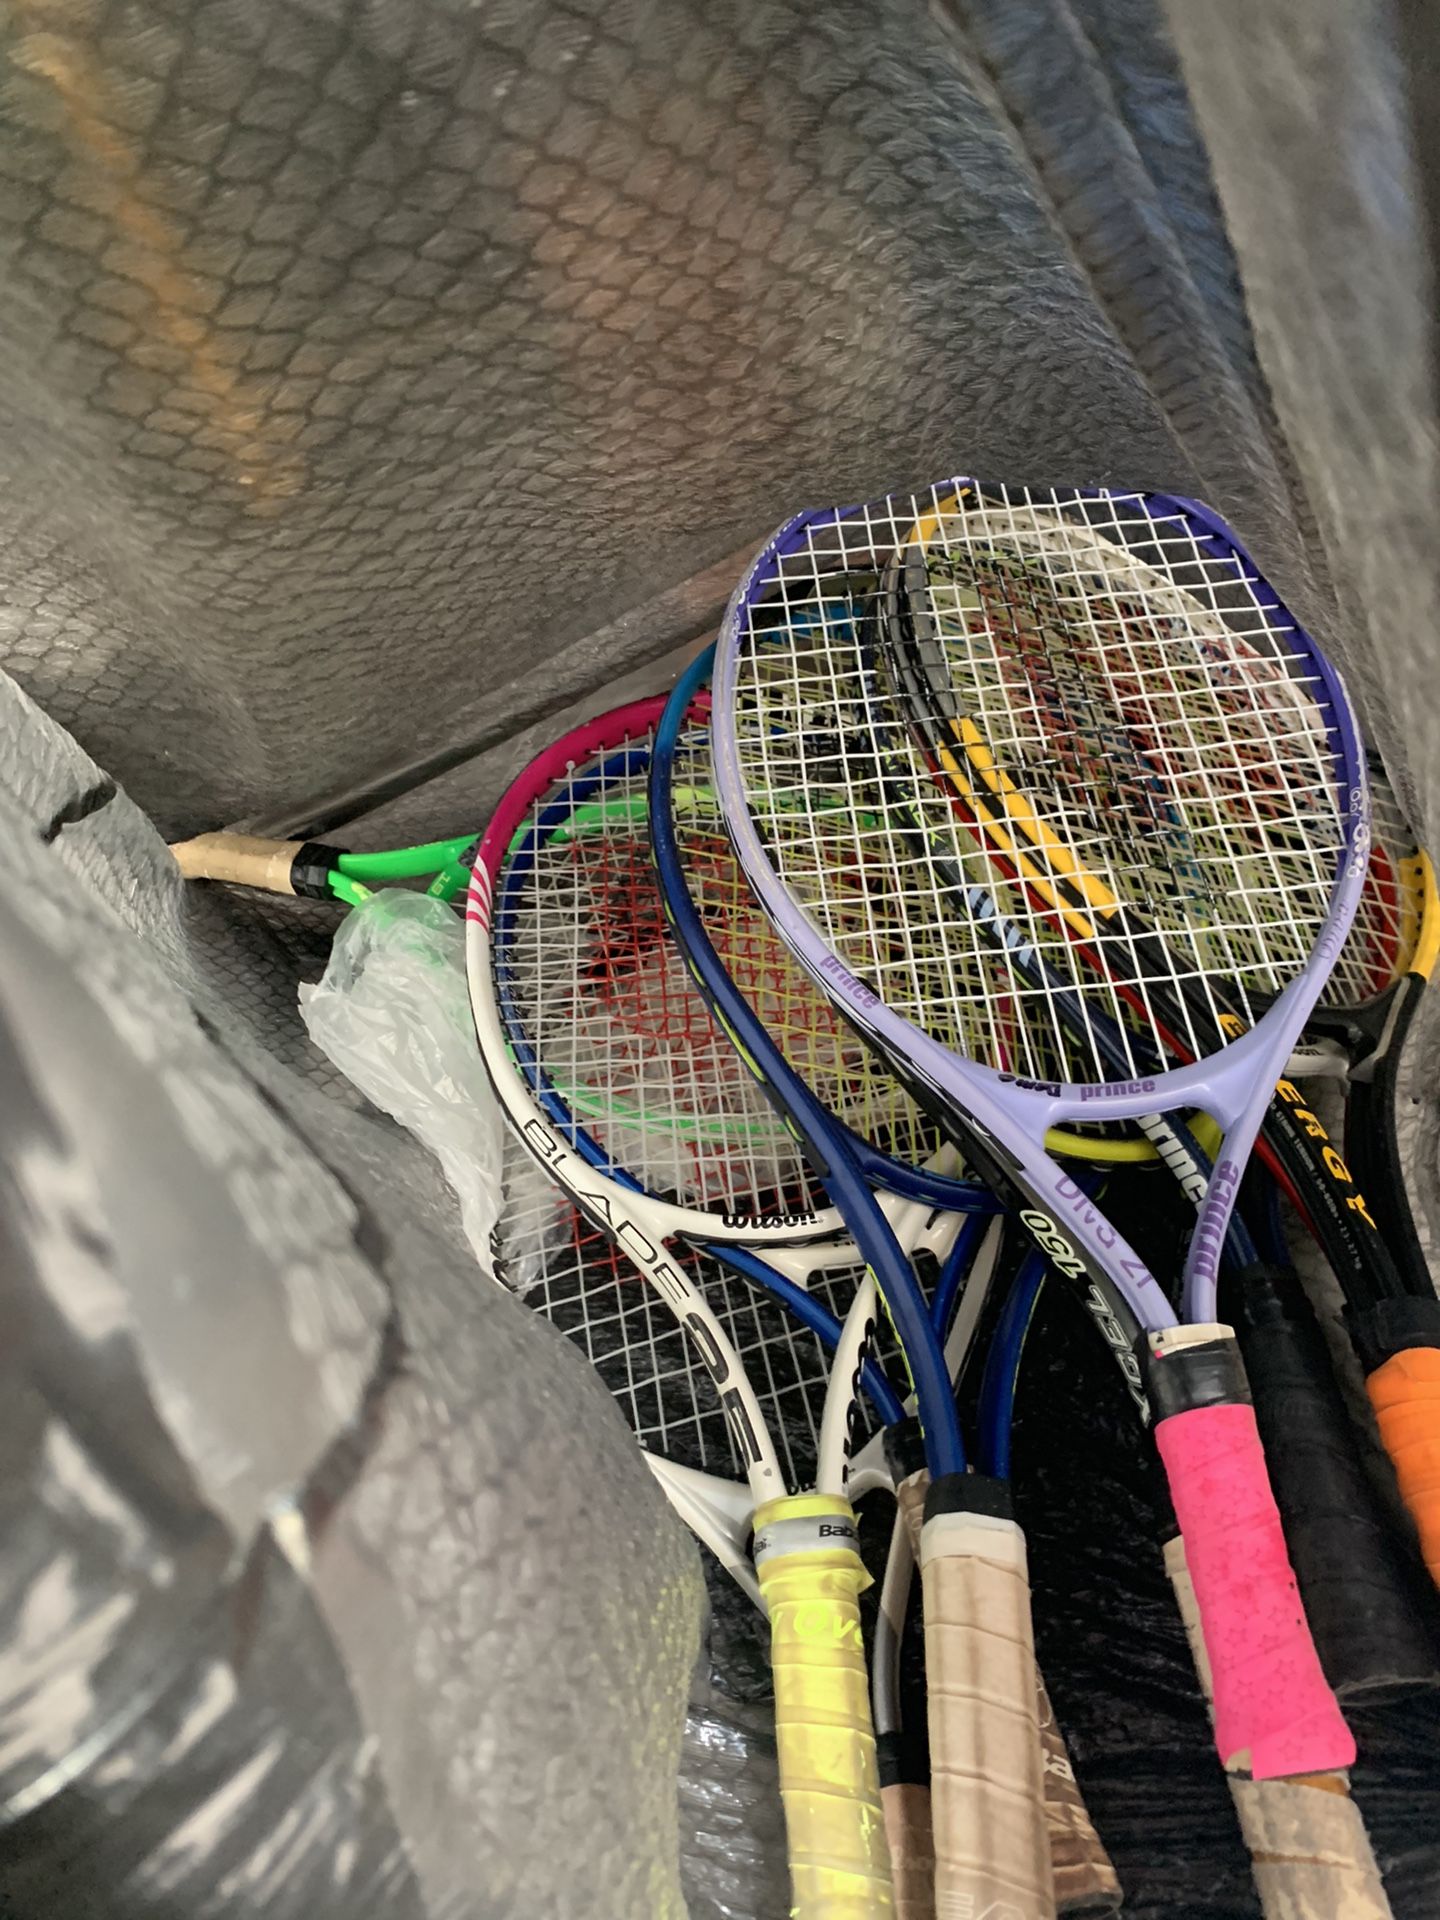 Used Tennis Rackets